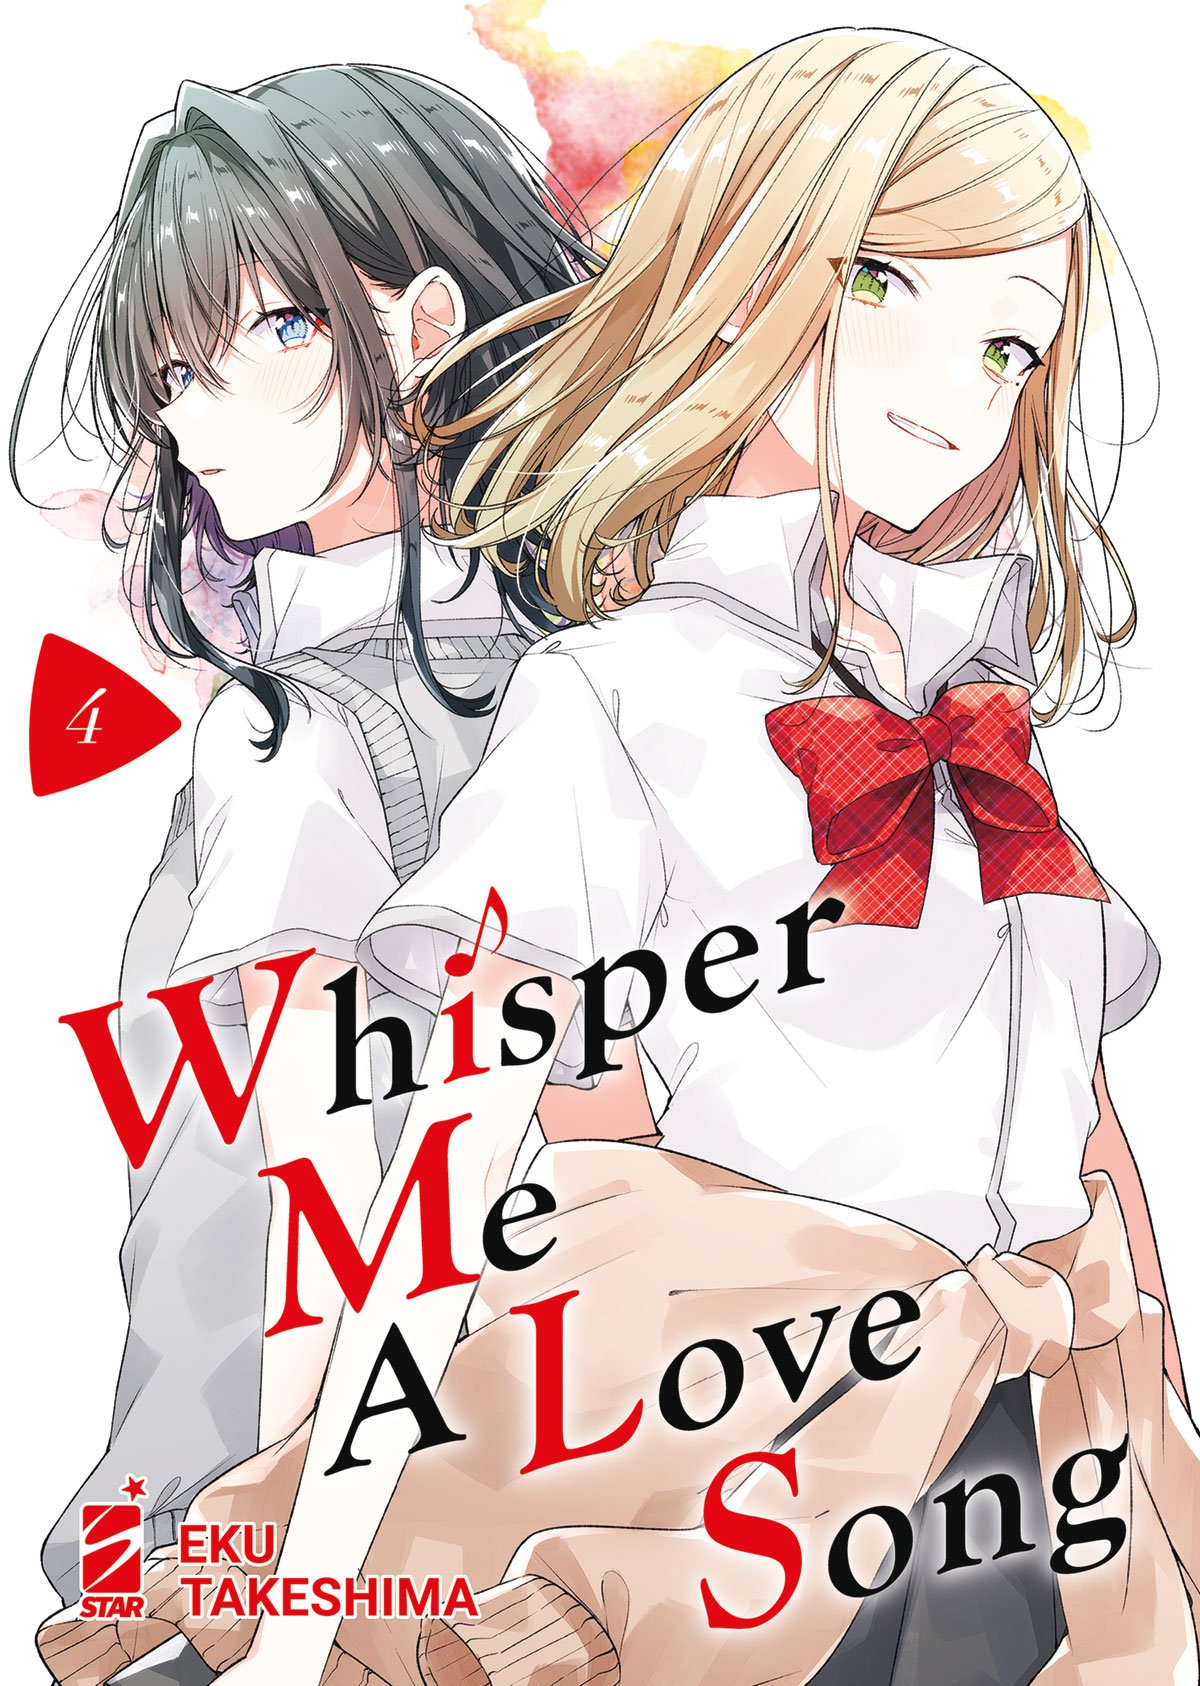 WHISPER ME A LOVE SONG n. 4, tra le uscite manga Star Comics del 2 Febbraio 2022